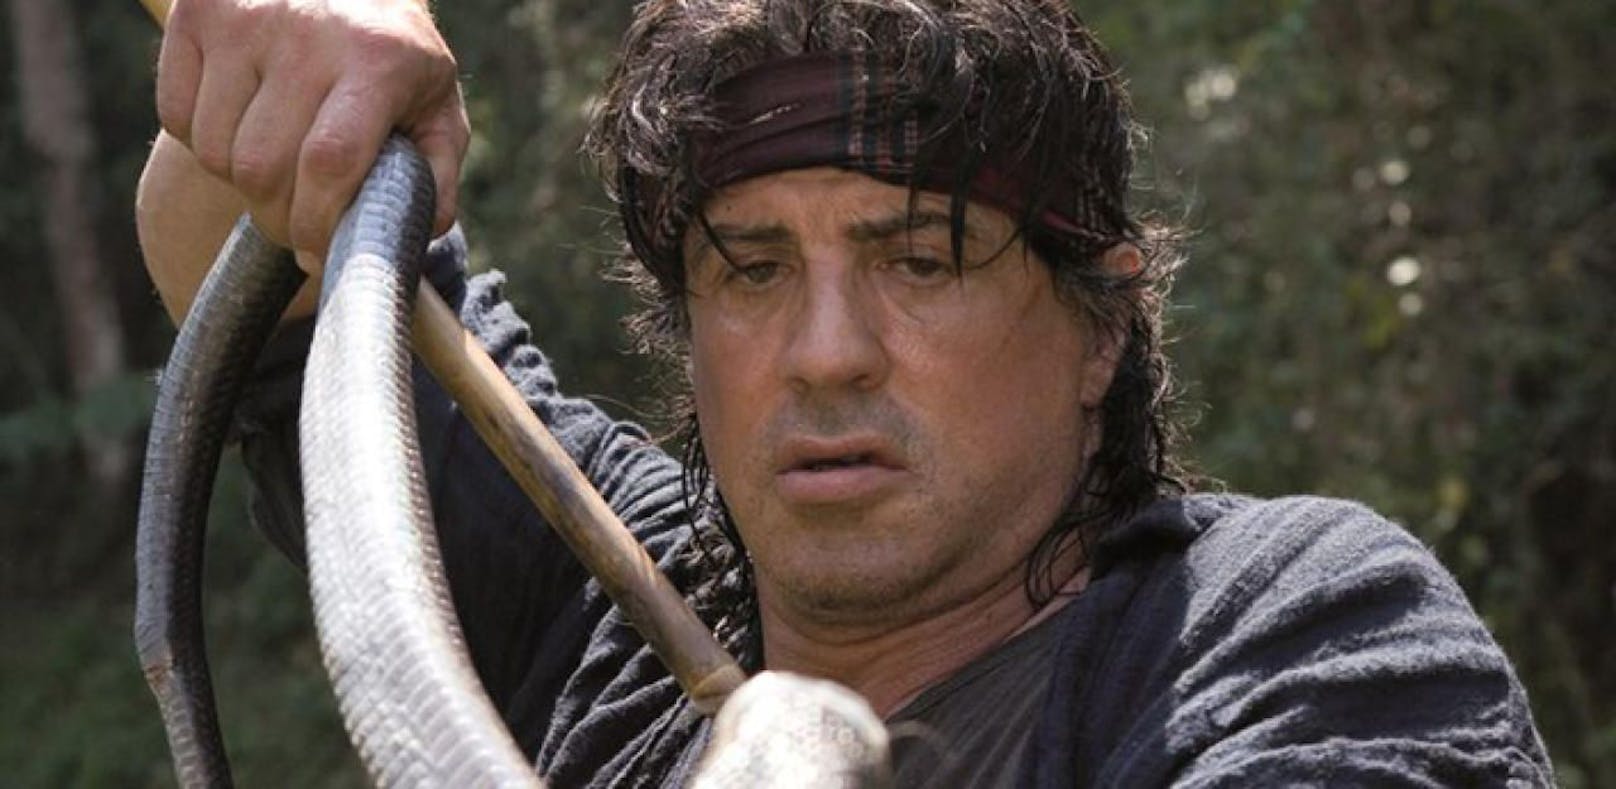 Bollywood plant ein "Rambo"-Remake